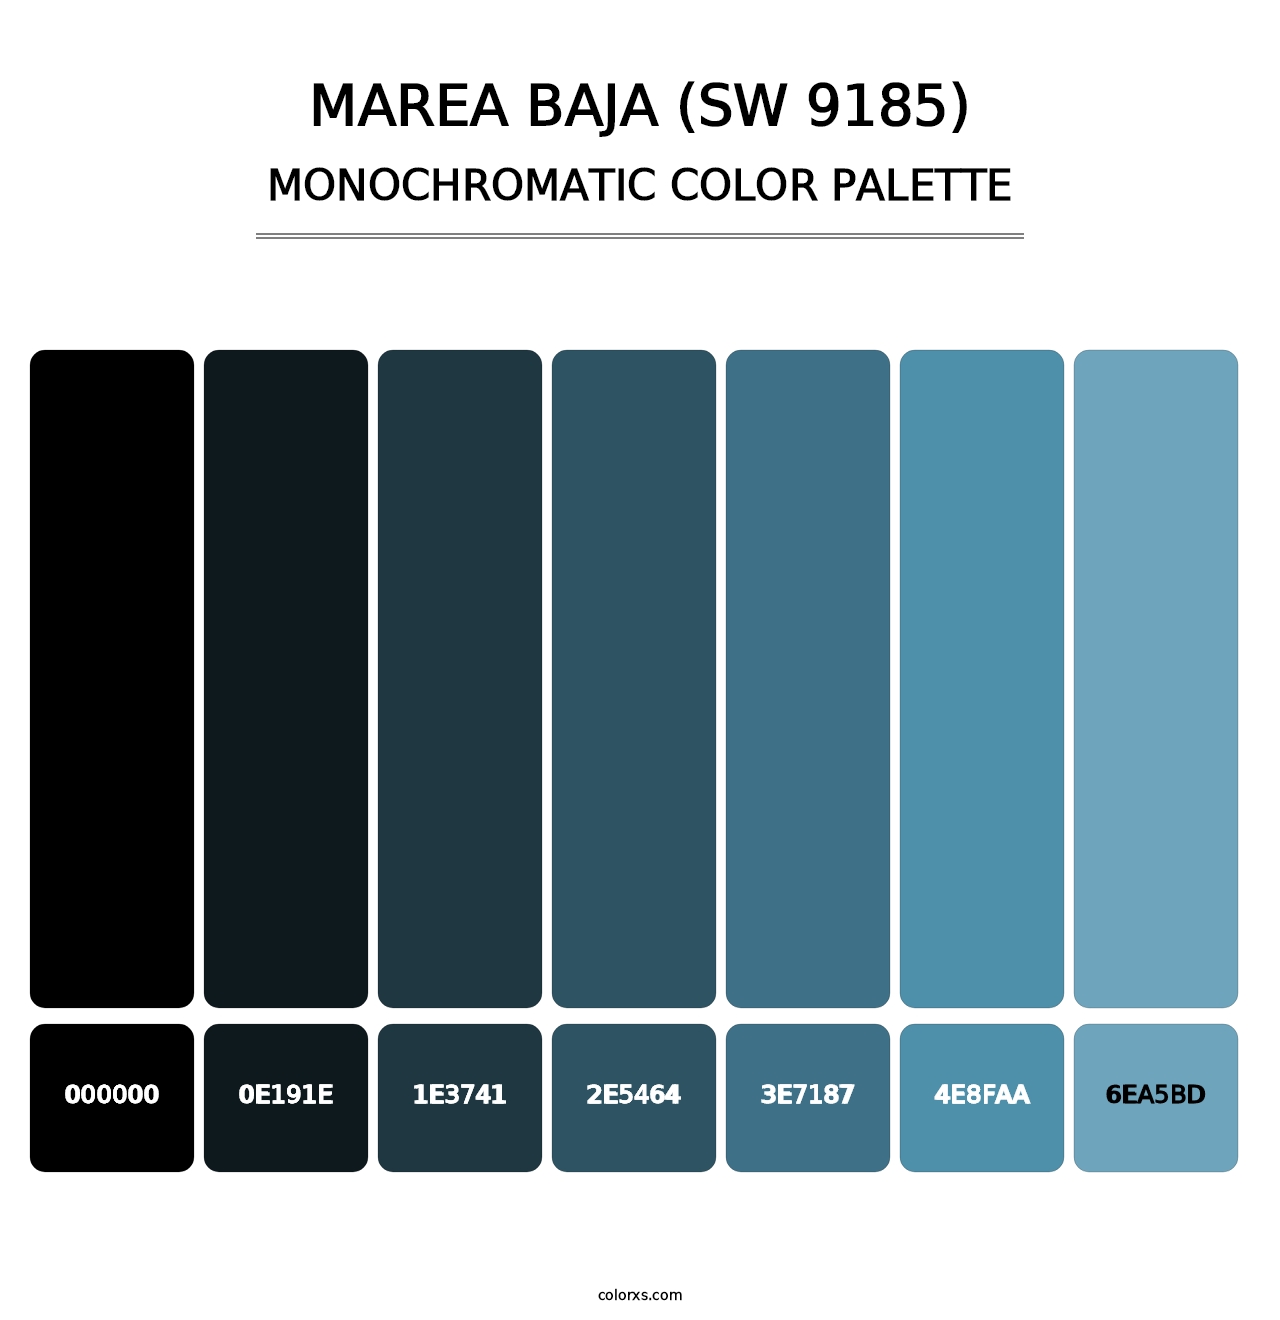 Marea Baja (SW 9185) - Monochromatic Color Palette